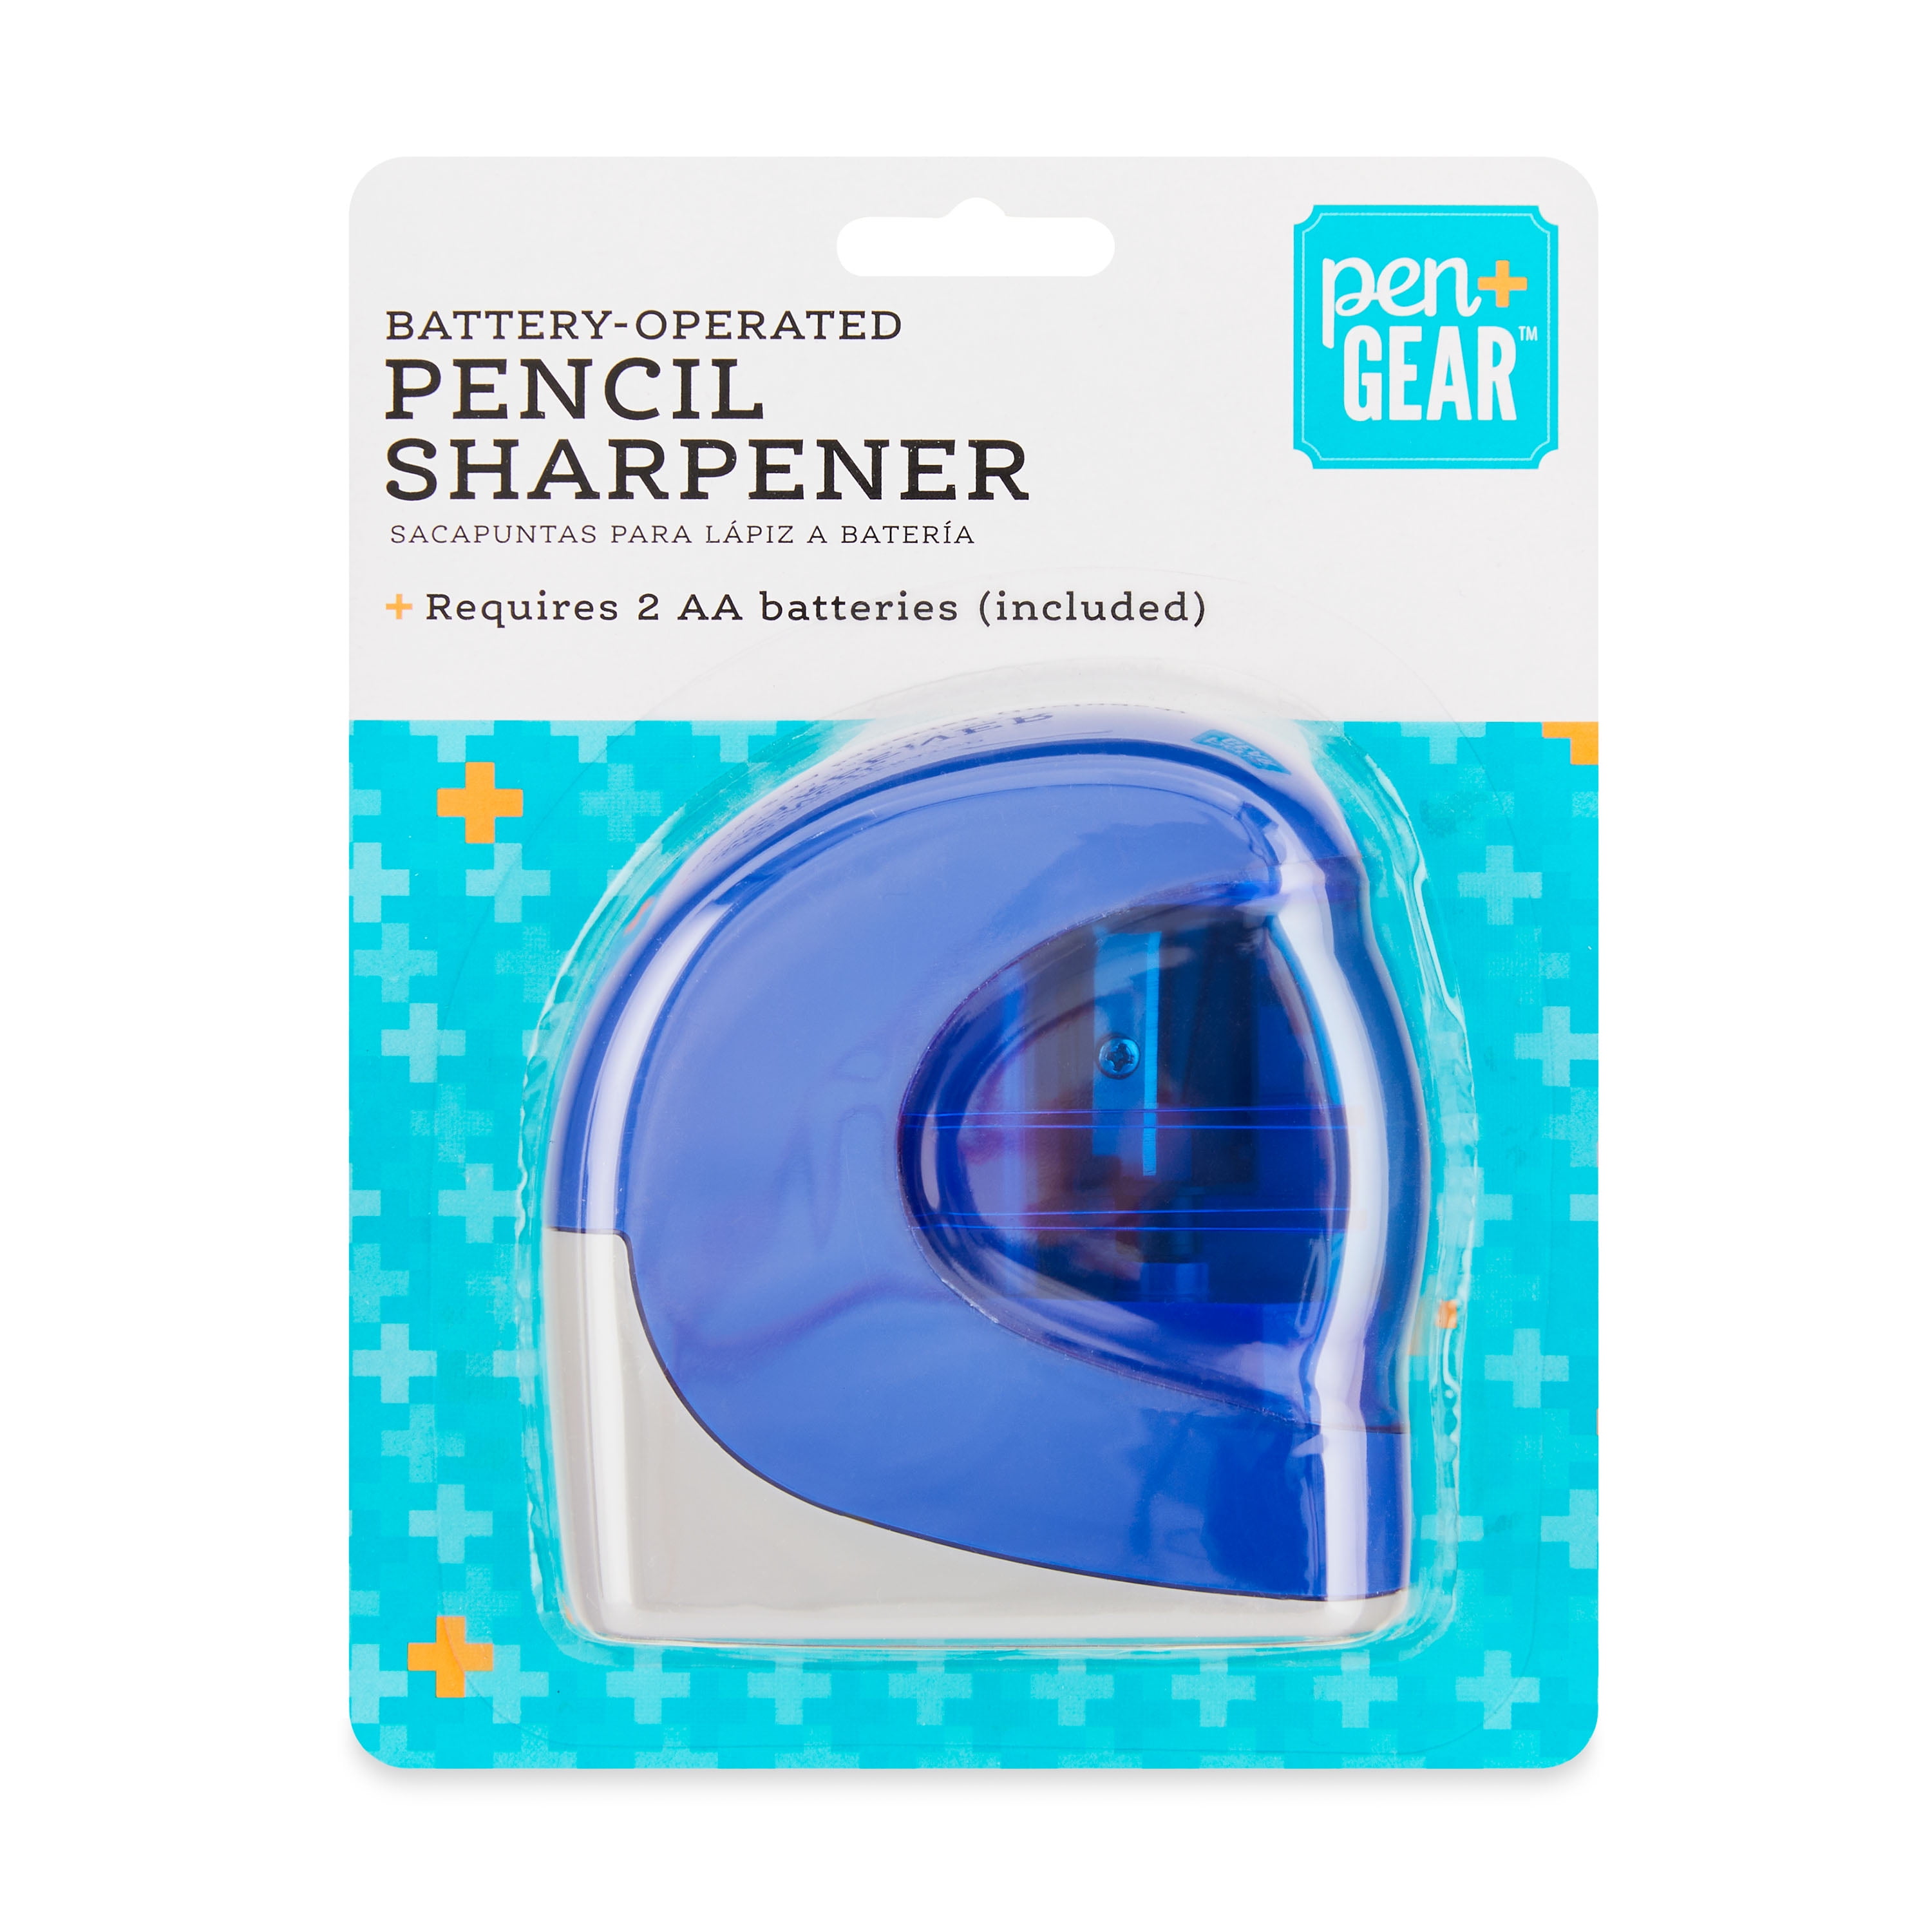 Pen+Gear Battery-Operated Pencil Sharpener, Blue